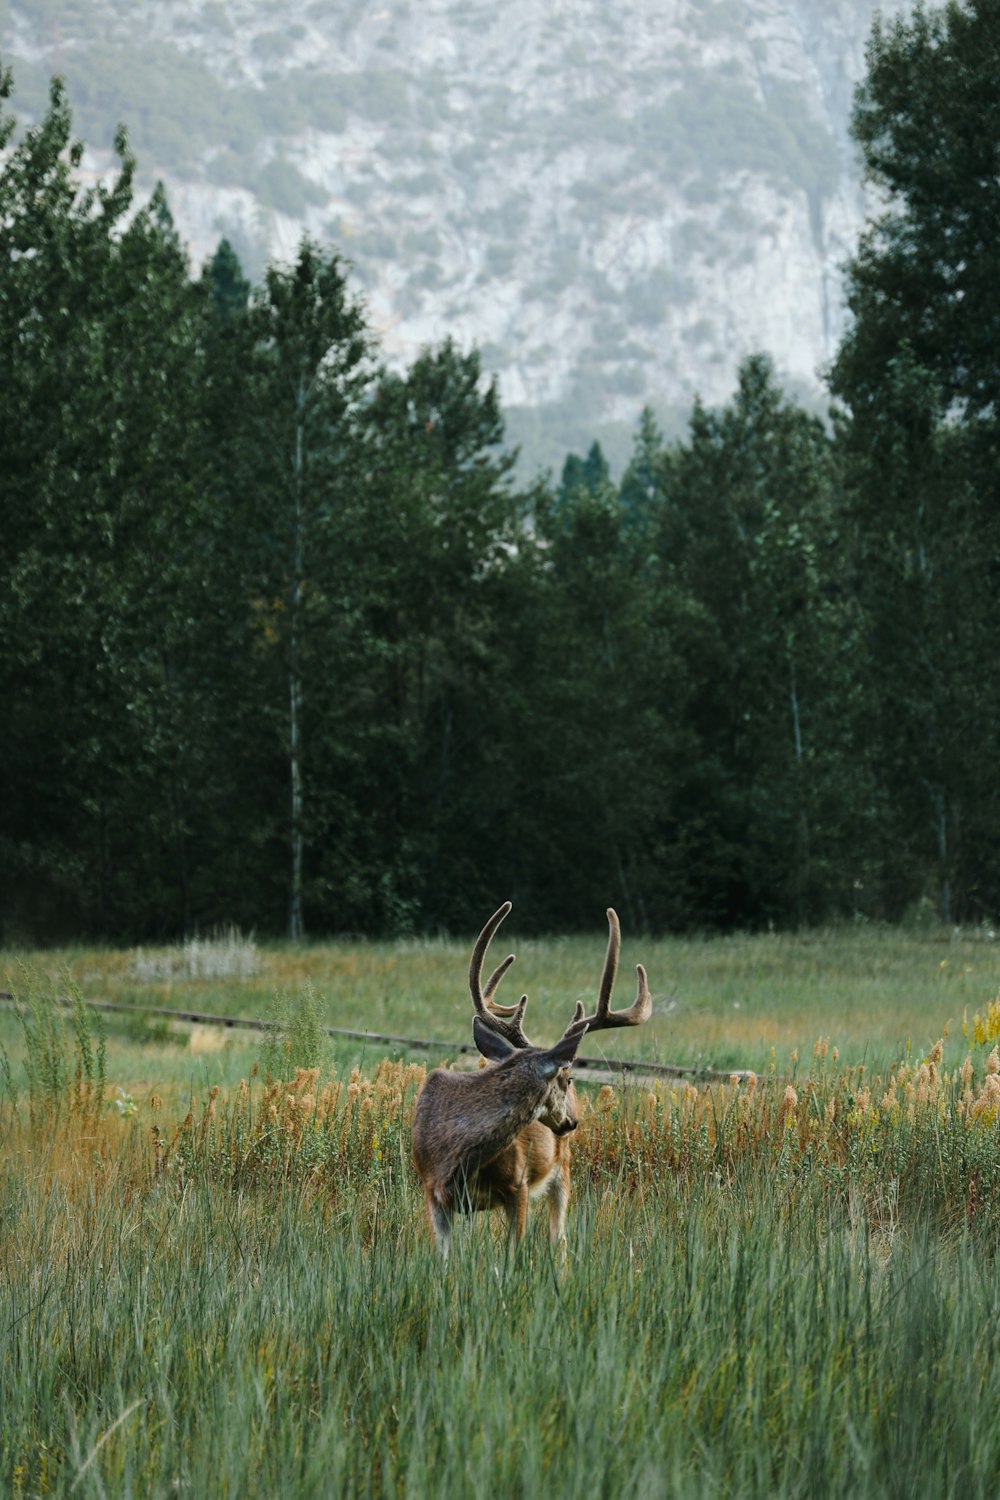 a deer is standing in a field of tall grass